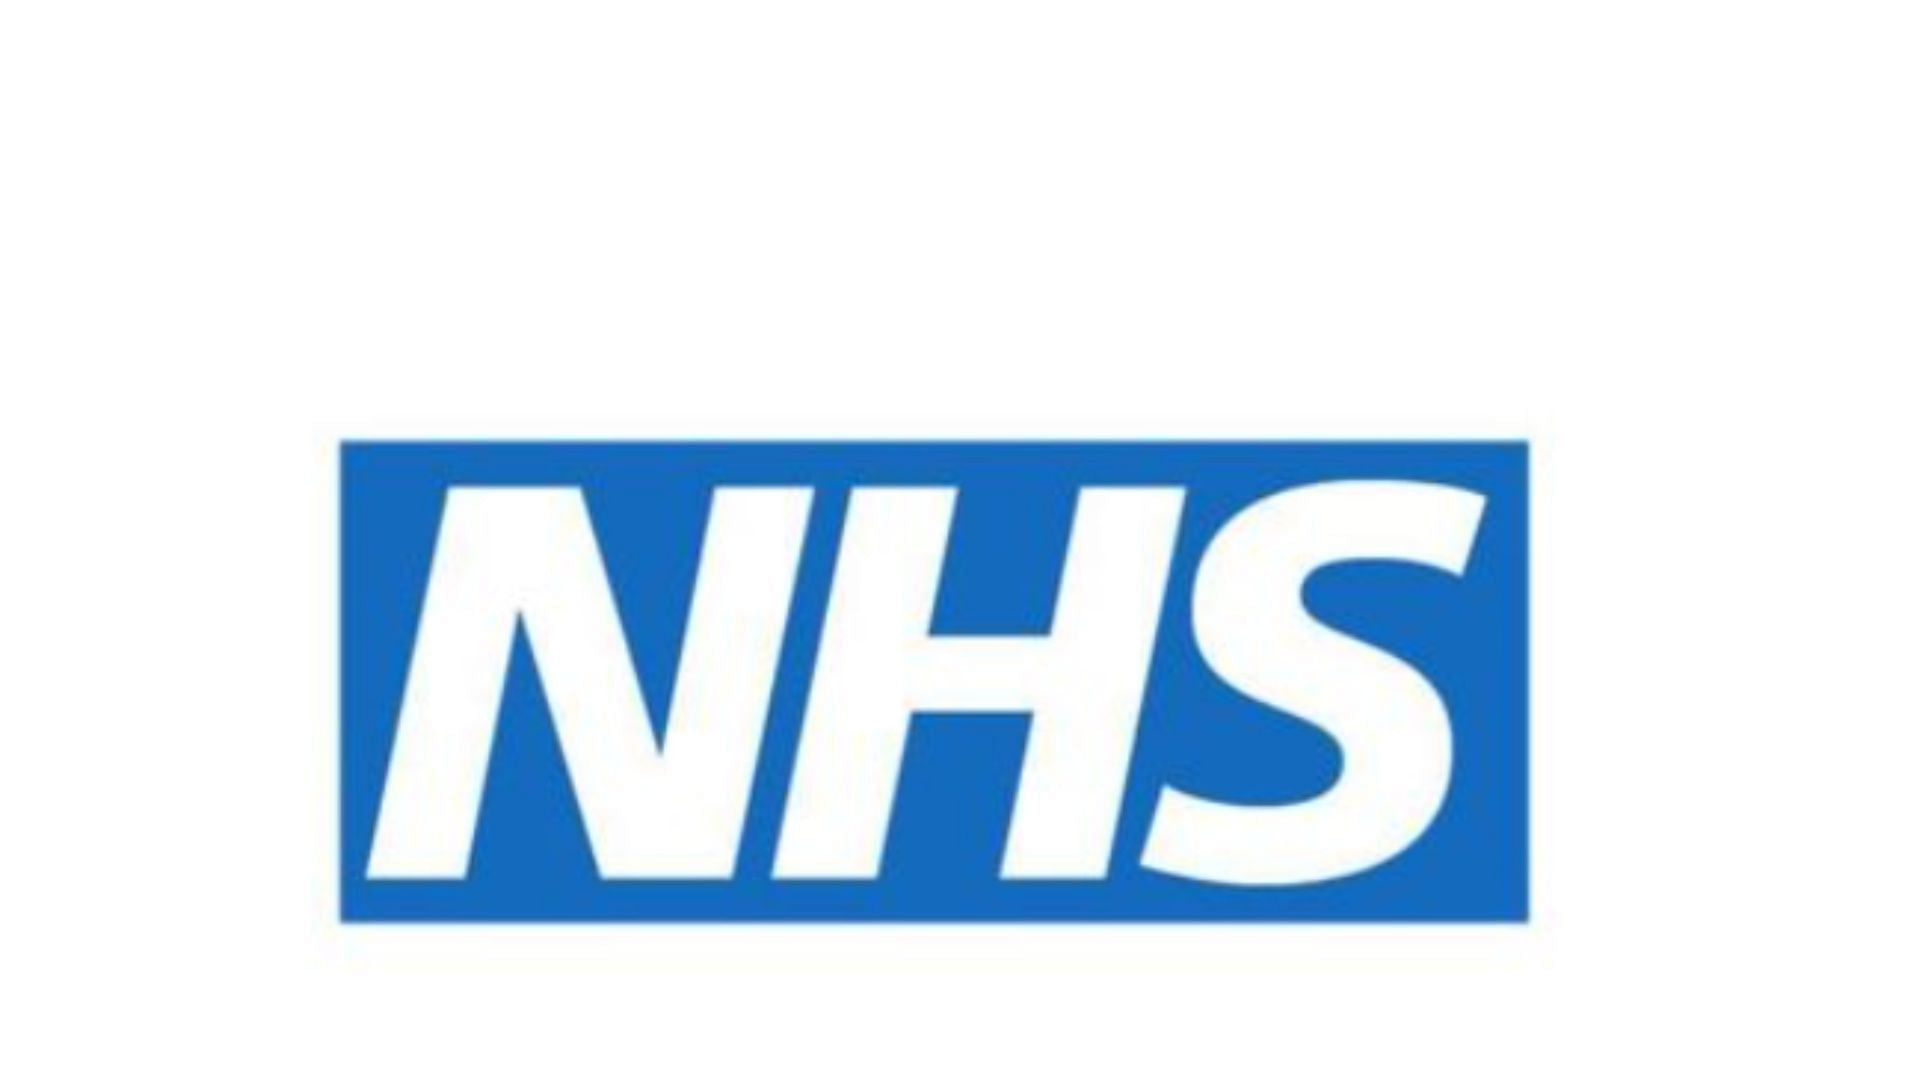 The logo of NHS England. (Image via Facebook/ nhs.uk)